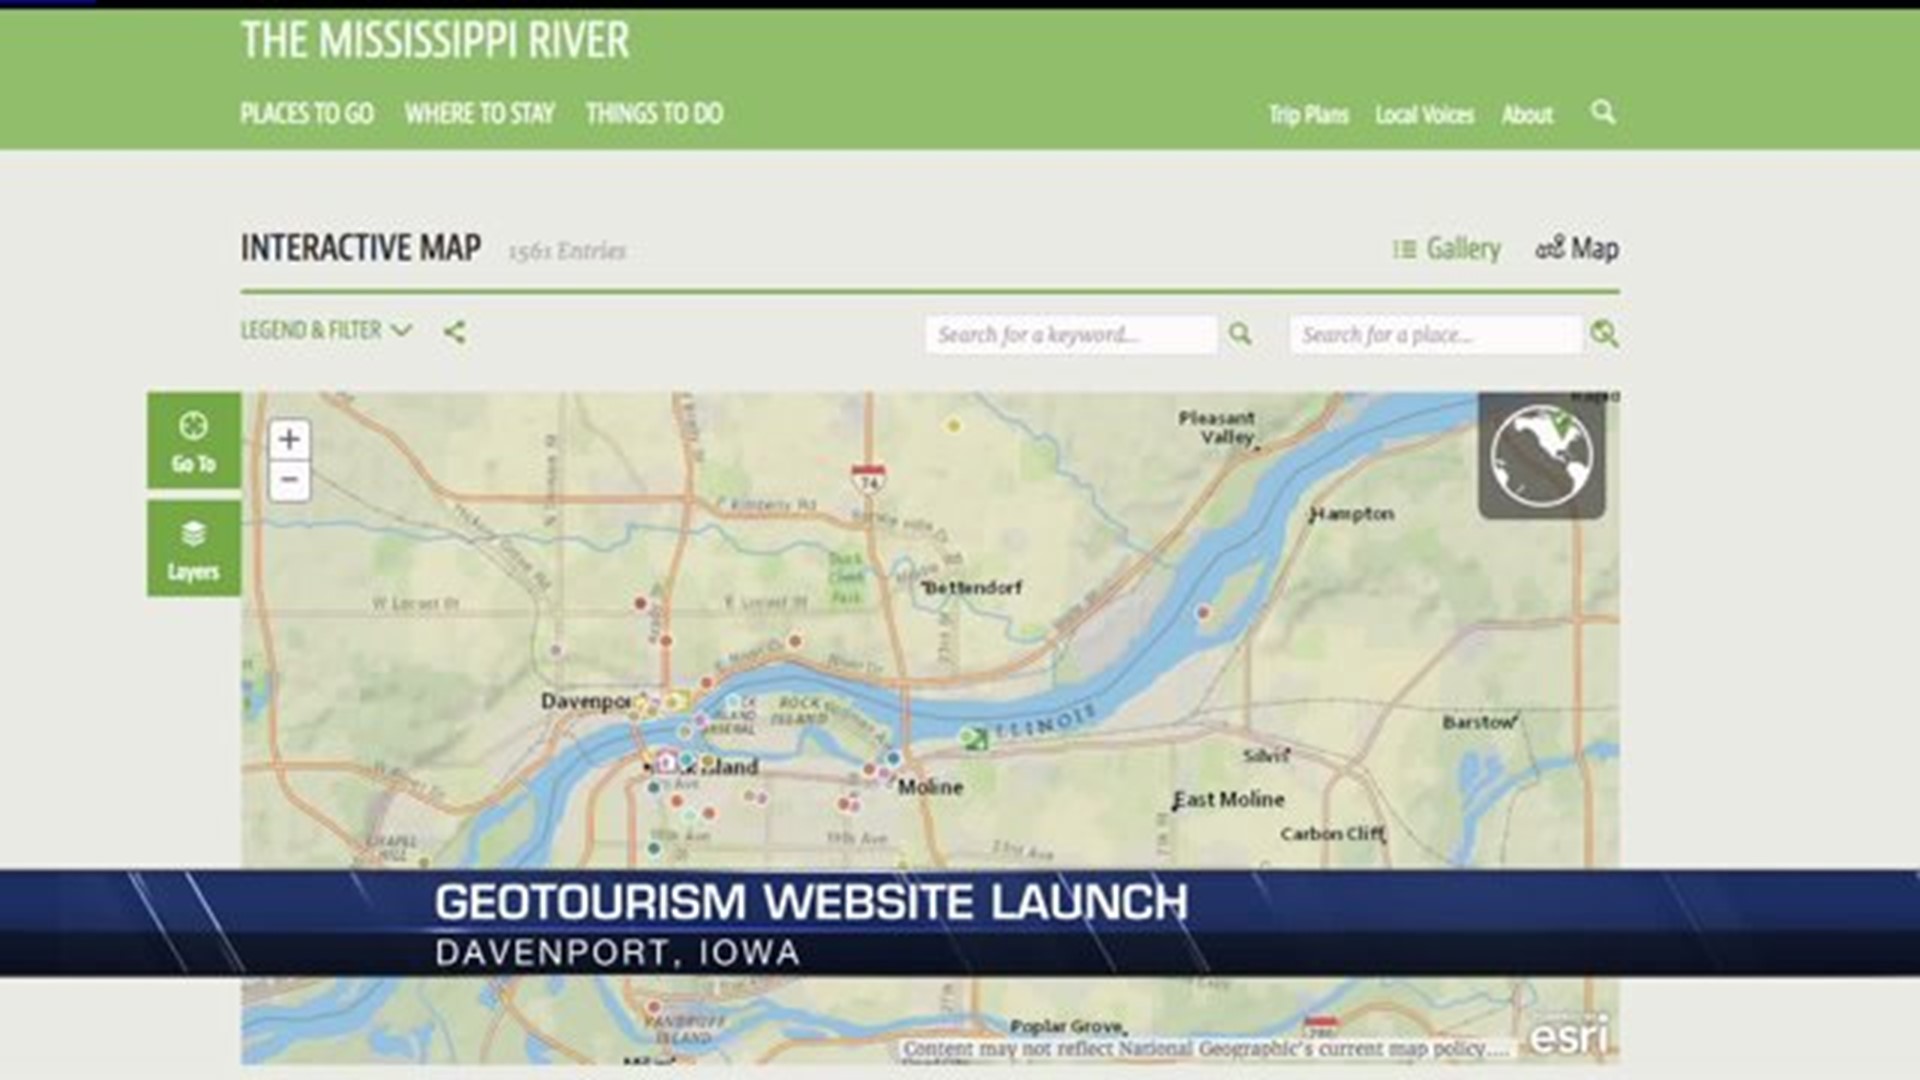 Geotourism website launch